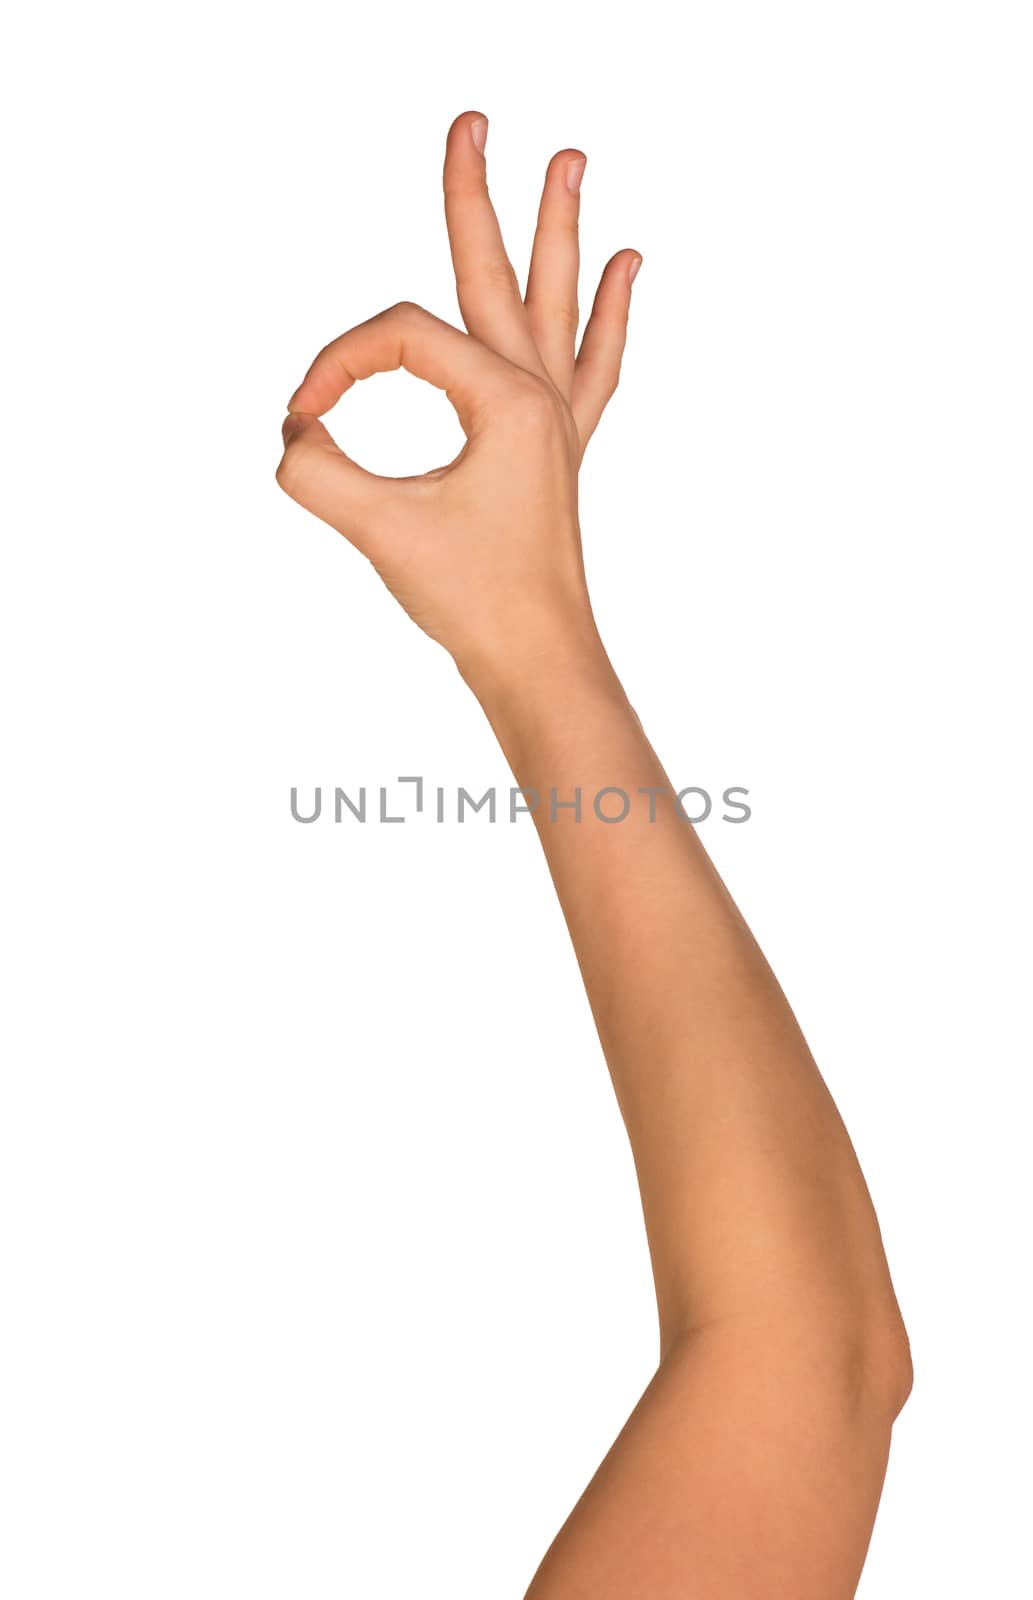 Hand OK sign isolated on white background